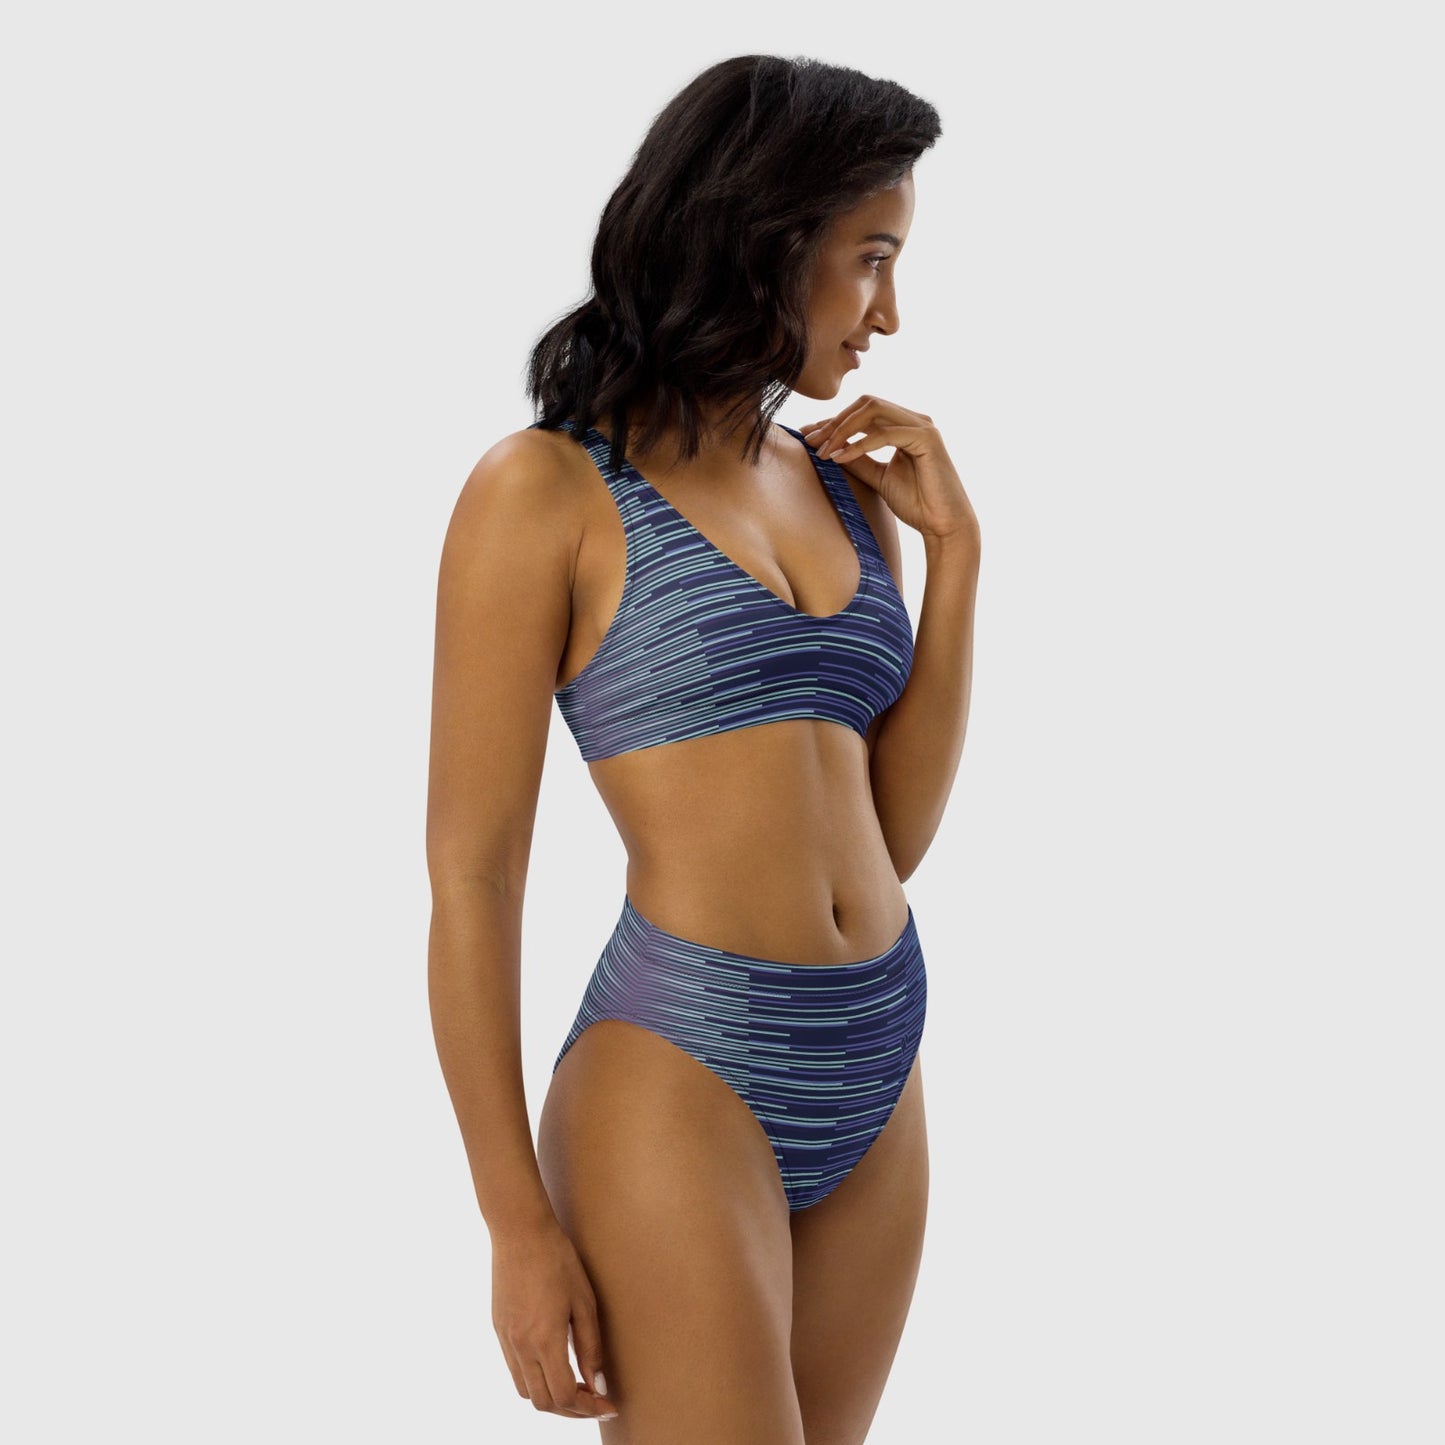 Periwinkle and Mint Gradient Bikini - Exclusive Women's Swimwear